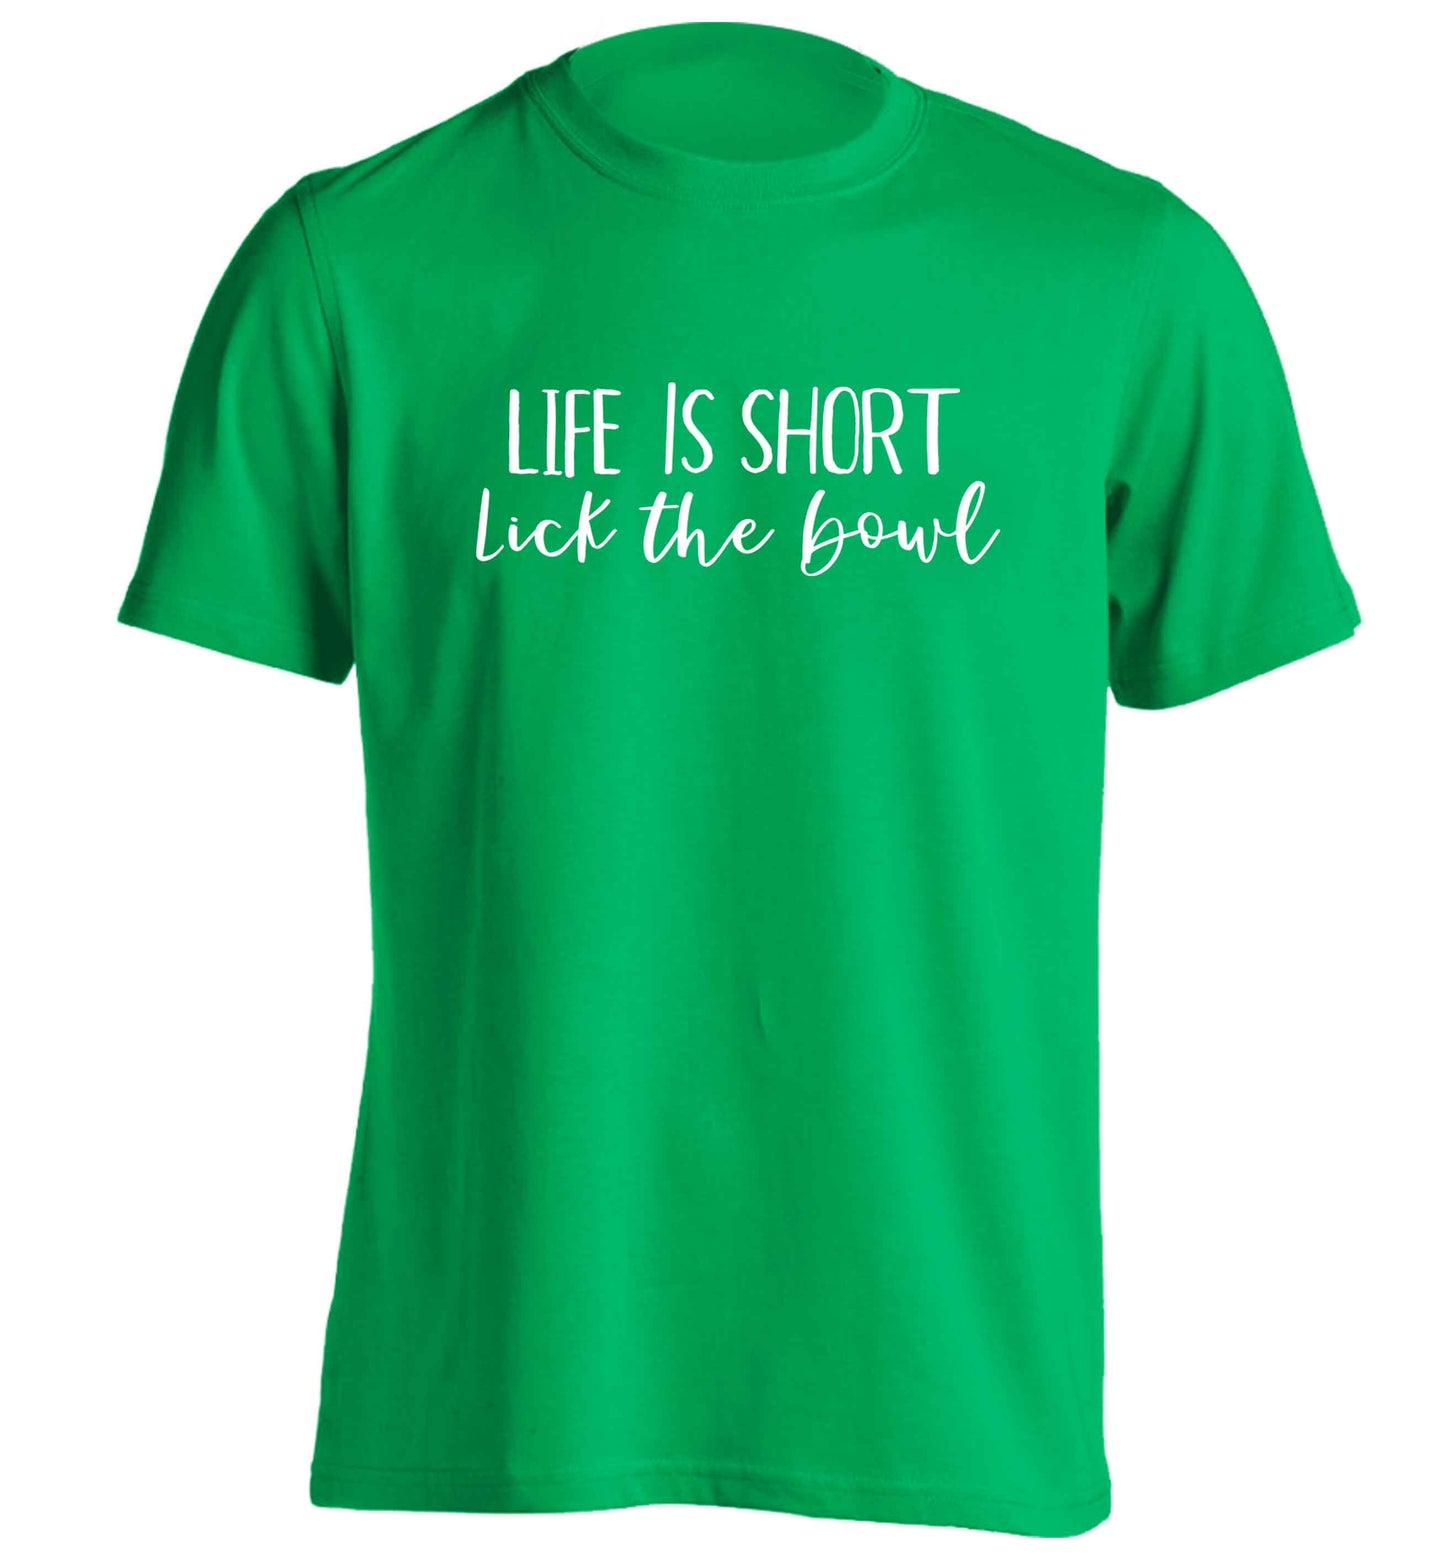 Life is short lick the bowl adults unisex green Tshirt 2XL